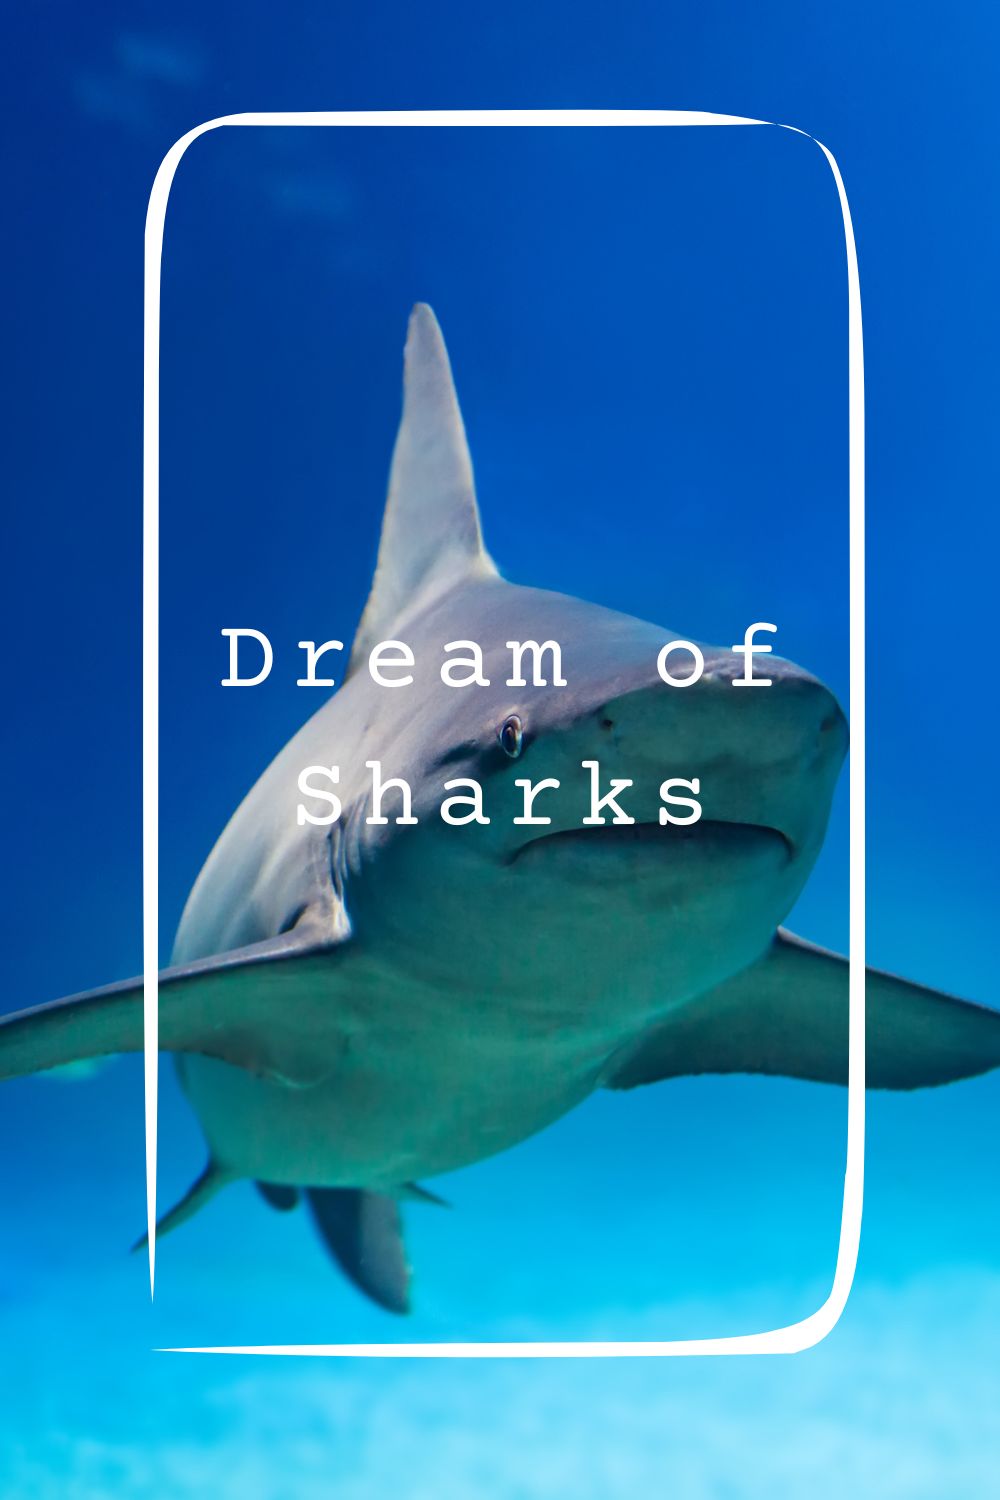 15 Dream of Sharks Meanings1